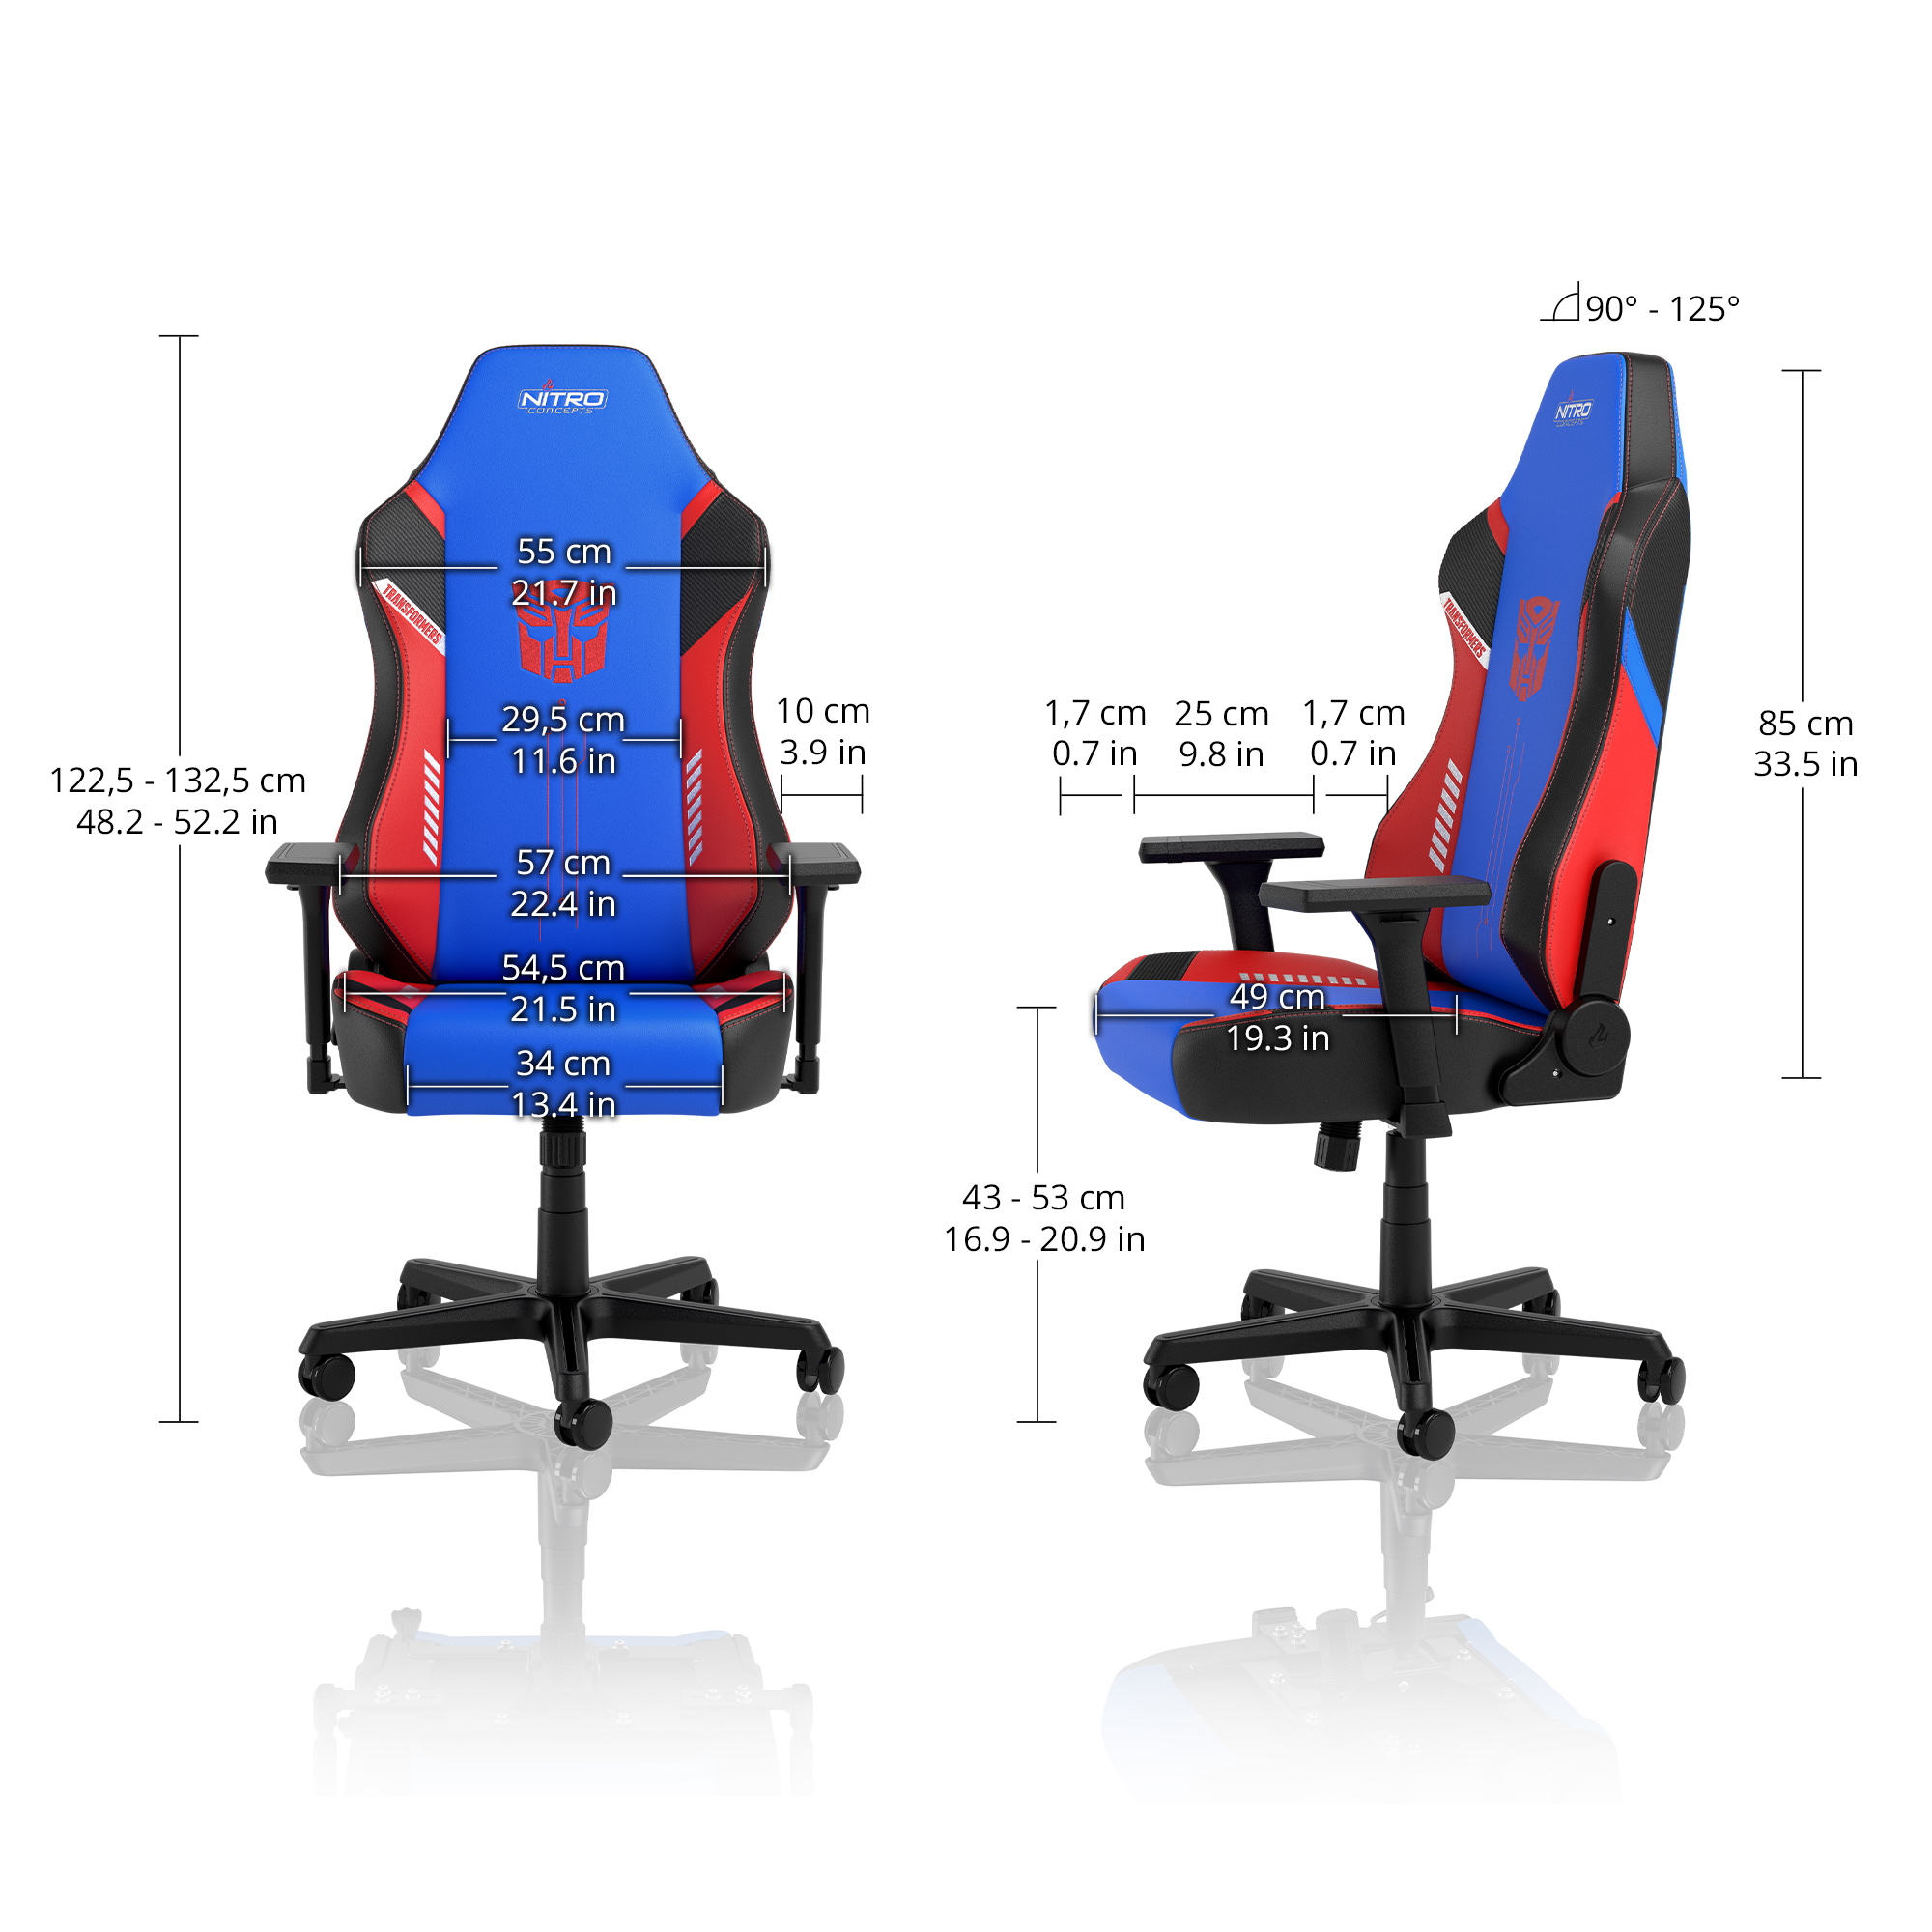 nitro-concepts - X1000 Gaming Chair Transformers Optimus Prime Edition